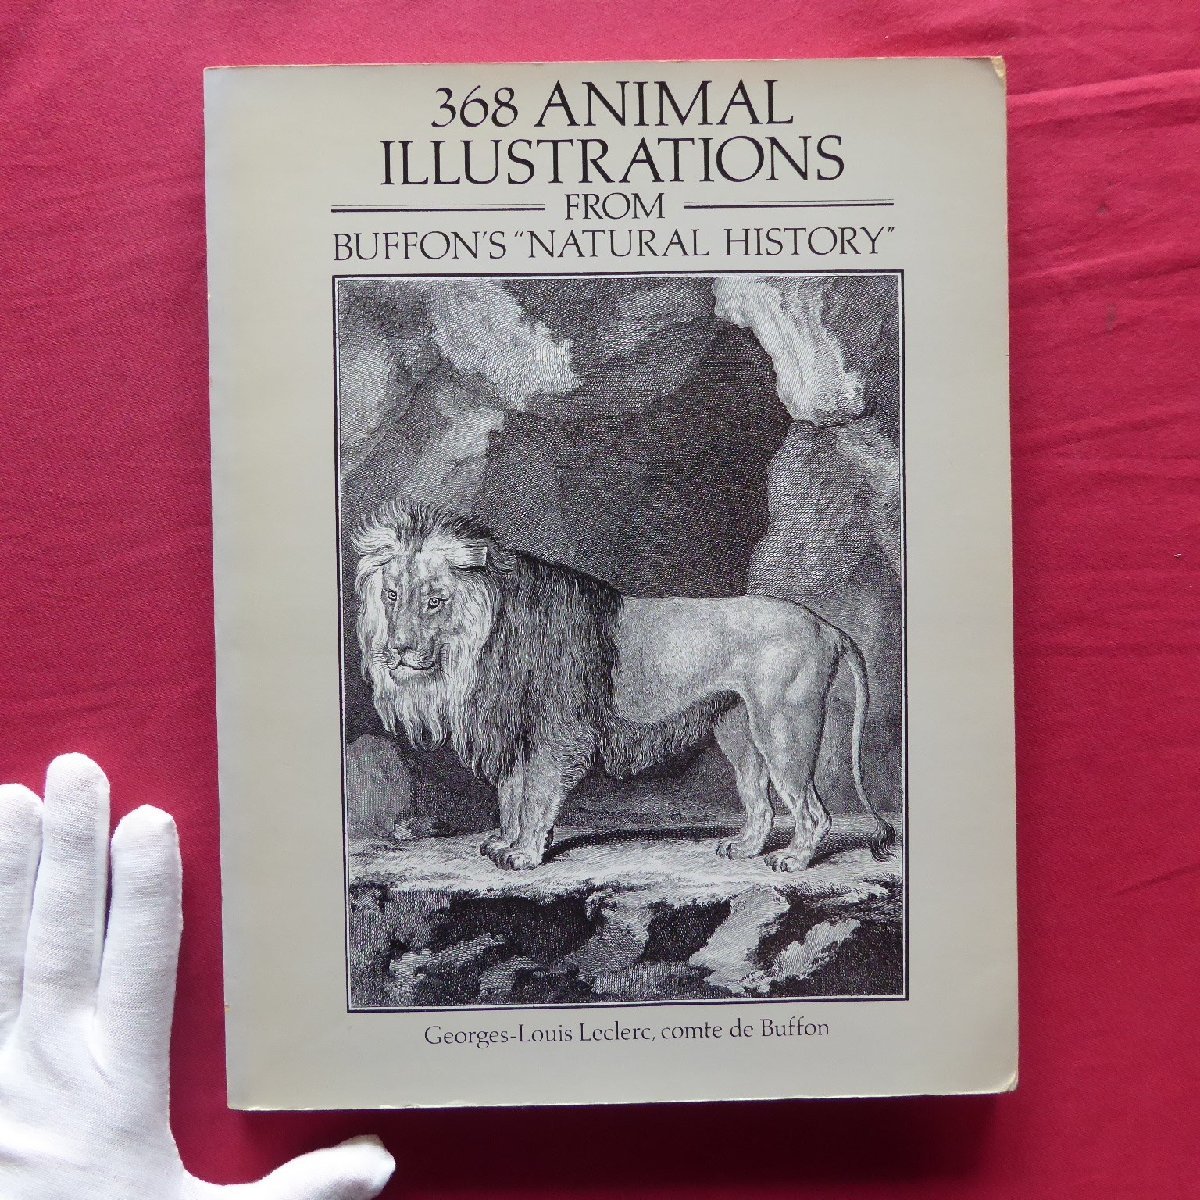 z12/洋書【ビュフォンの 博物誌 に掲載された368点の動物図鑑/368 Animal Illustrations from Buffon's Natural History】_画像1